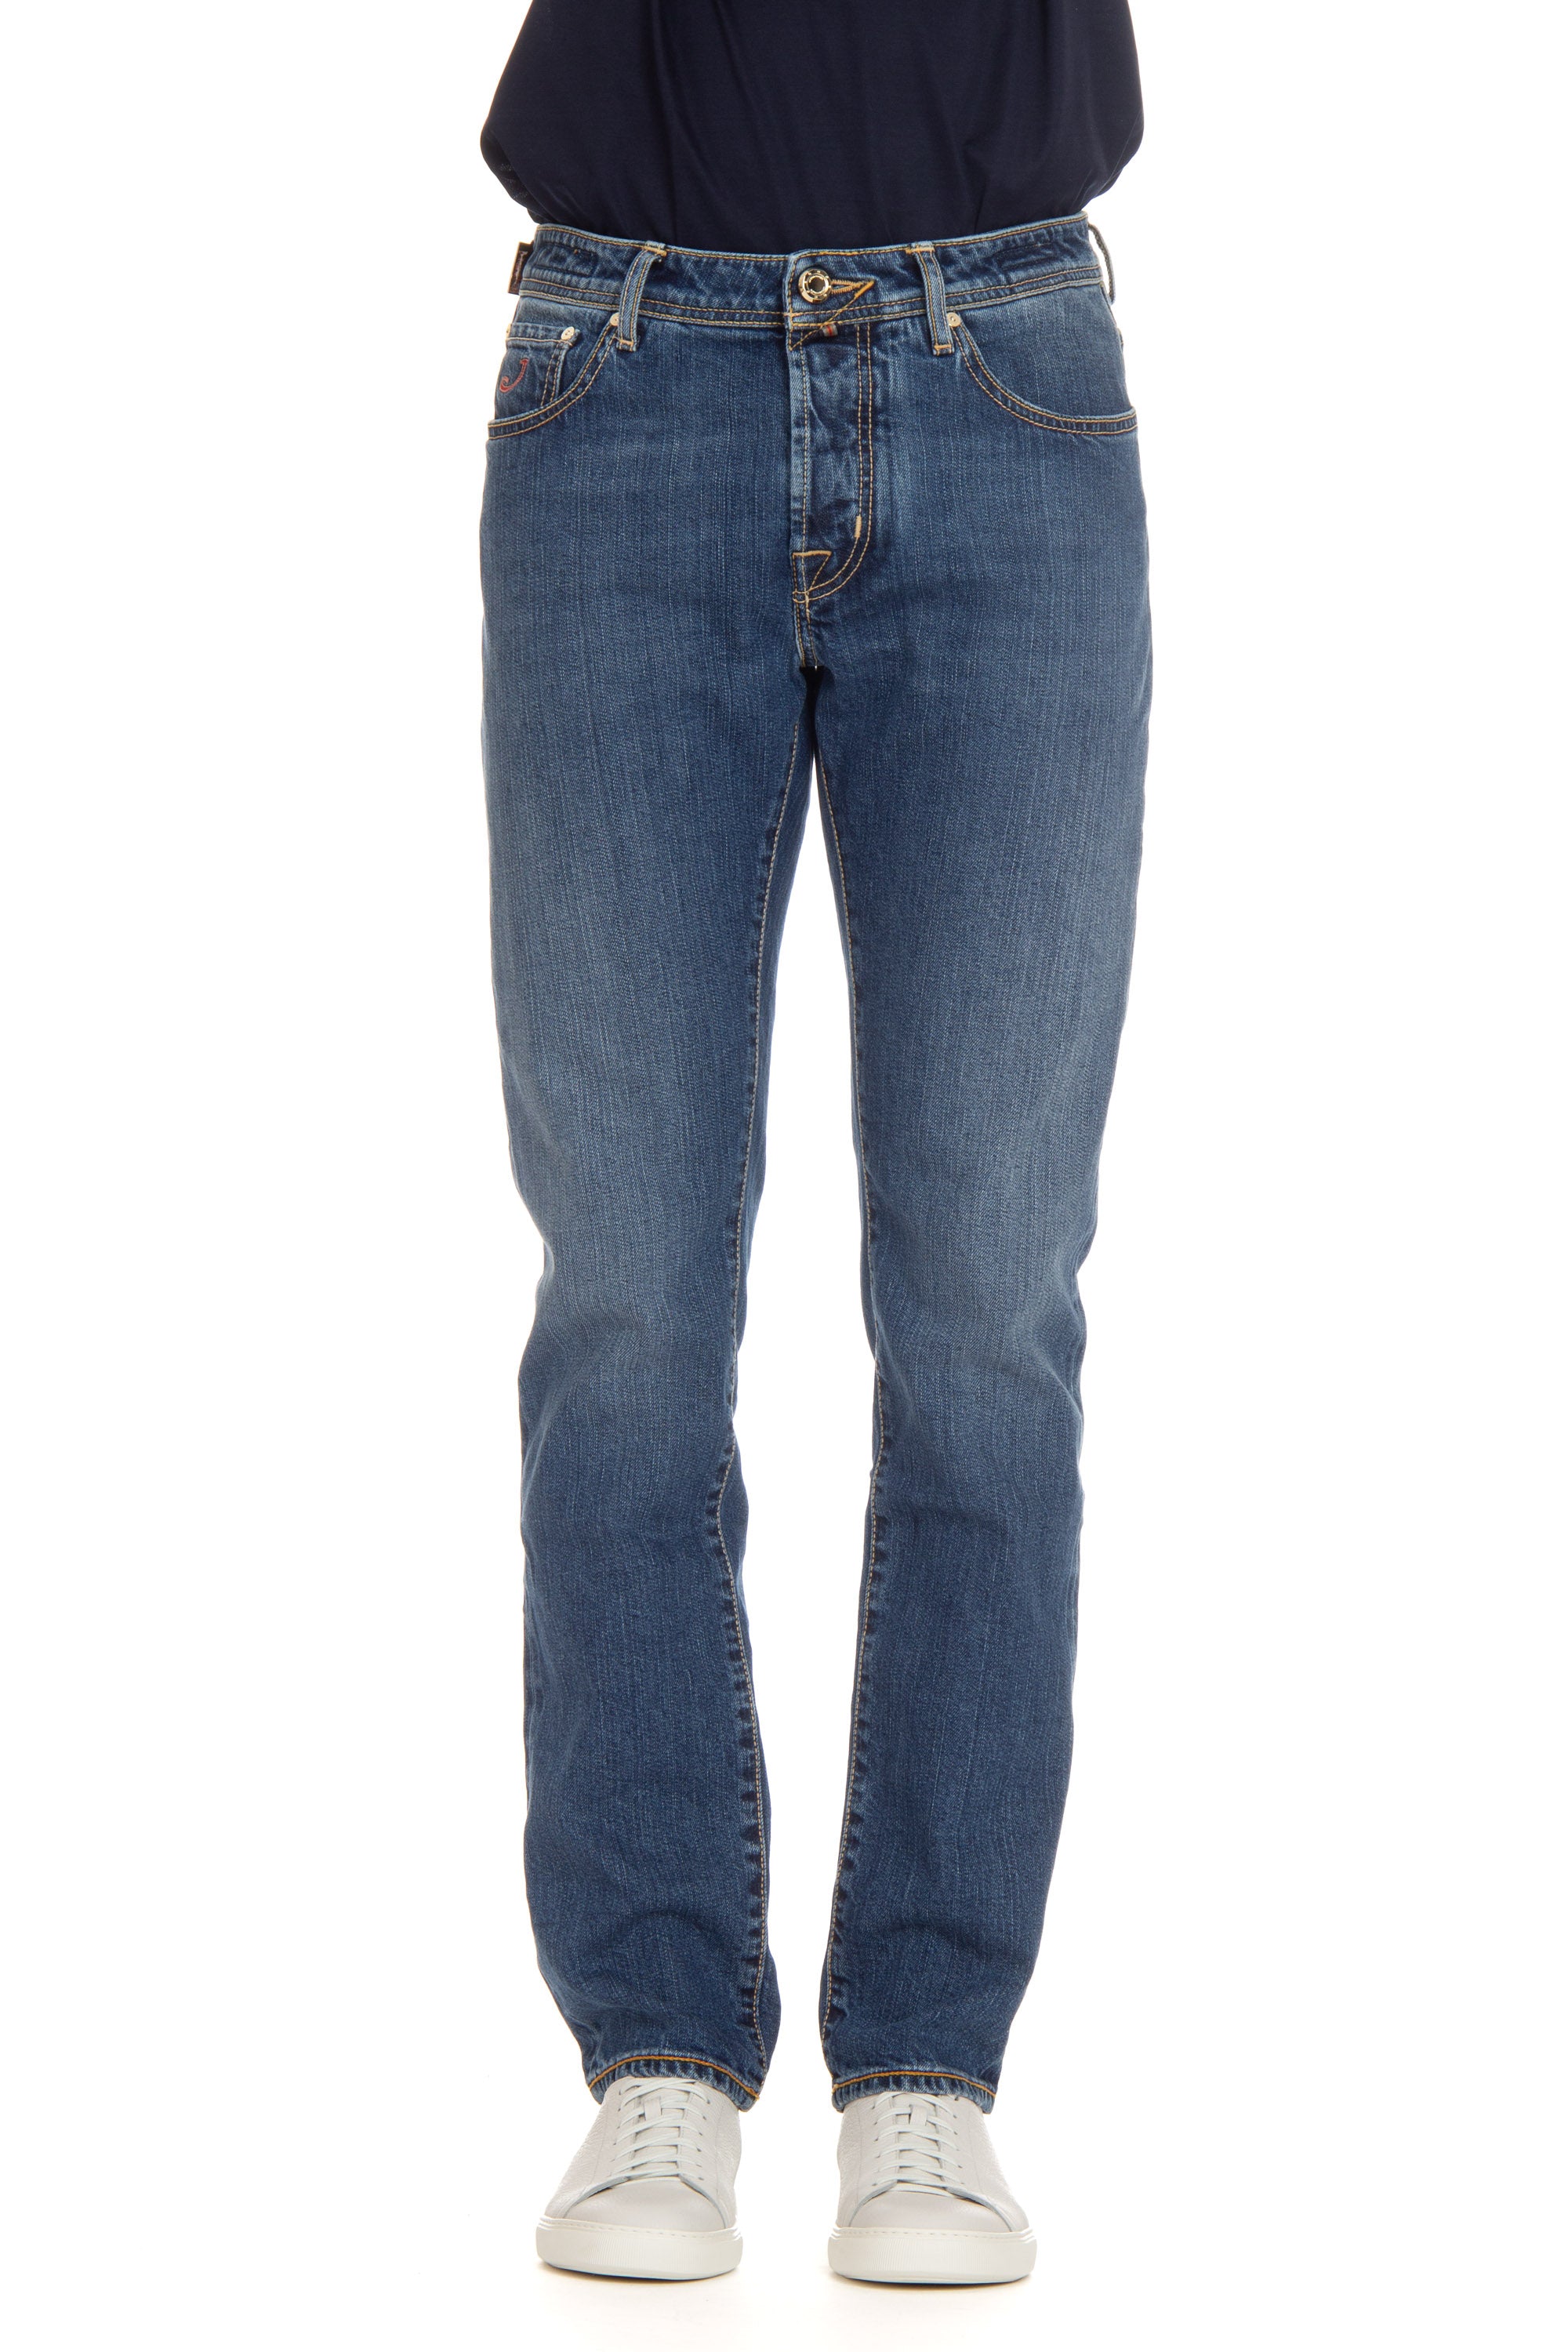 Jeans Limited Edition etichetta fucsia Bard fit